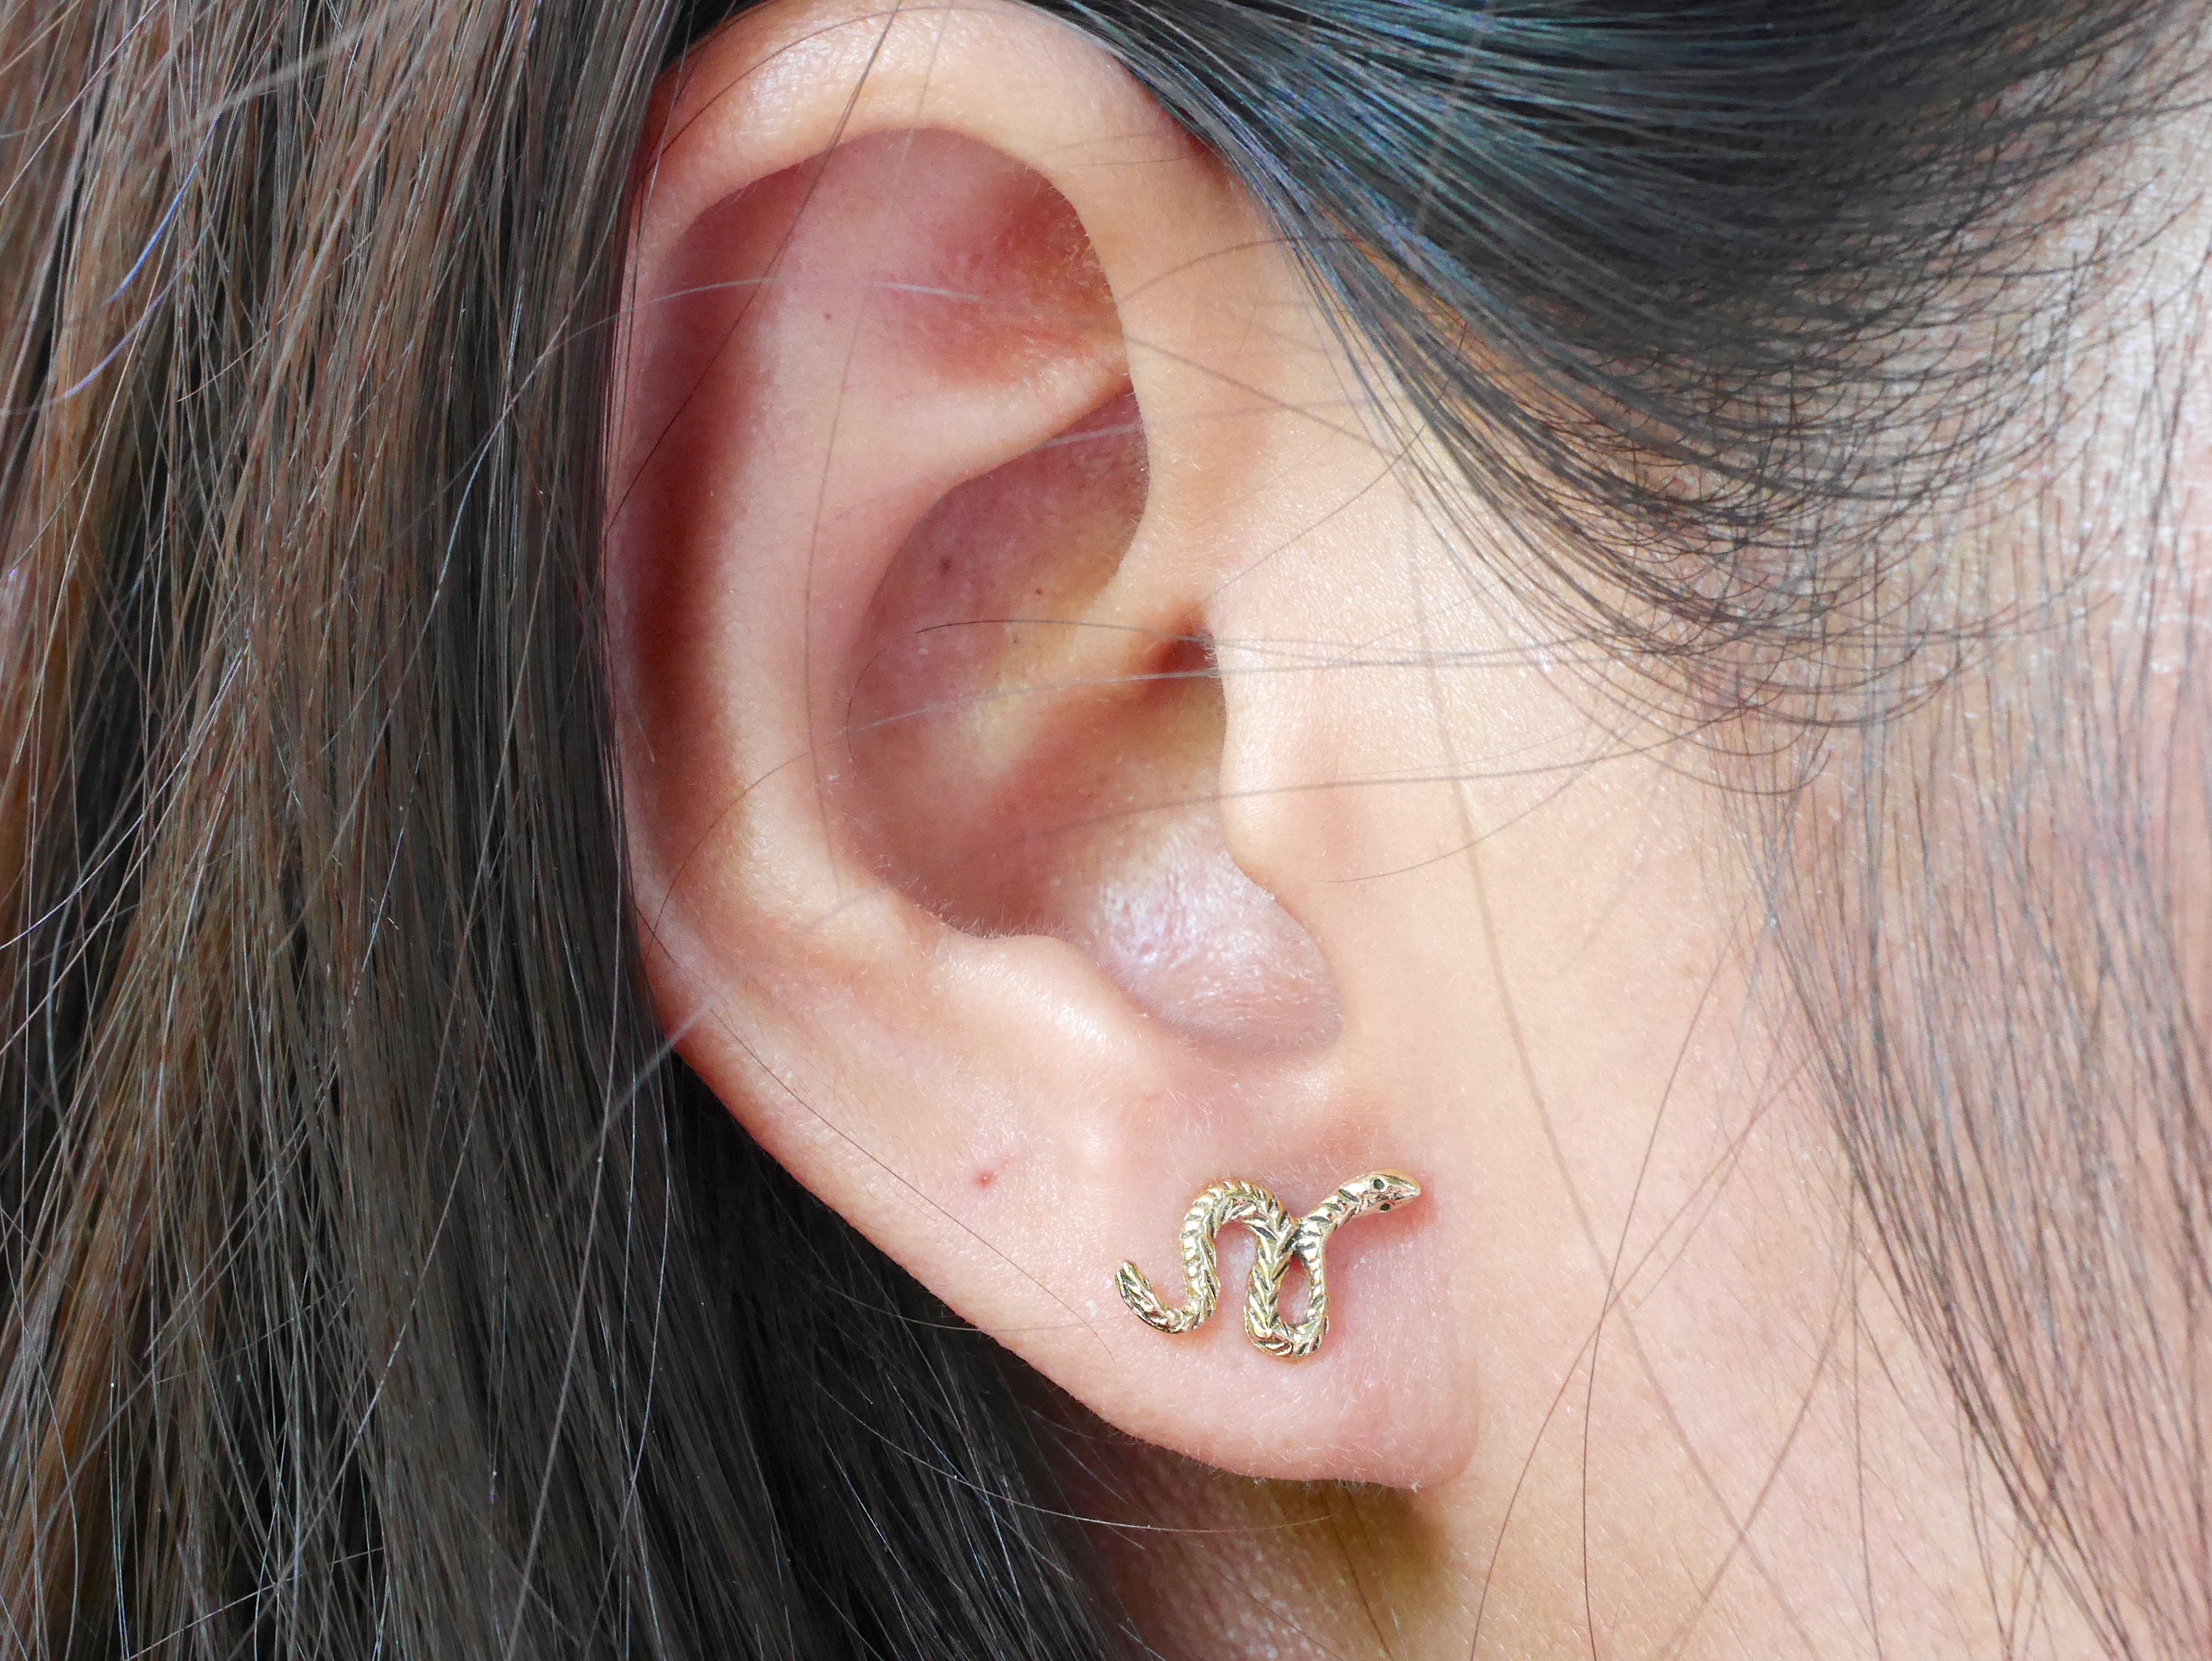 Snake Screw Back Gold Stud Earrings for Women by PAVOI